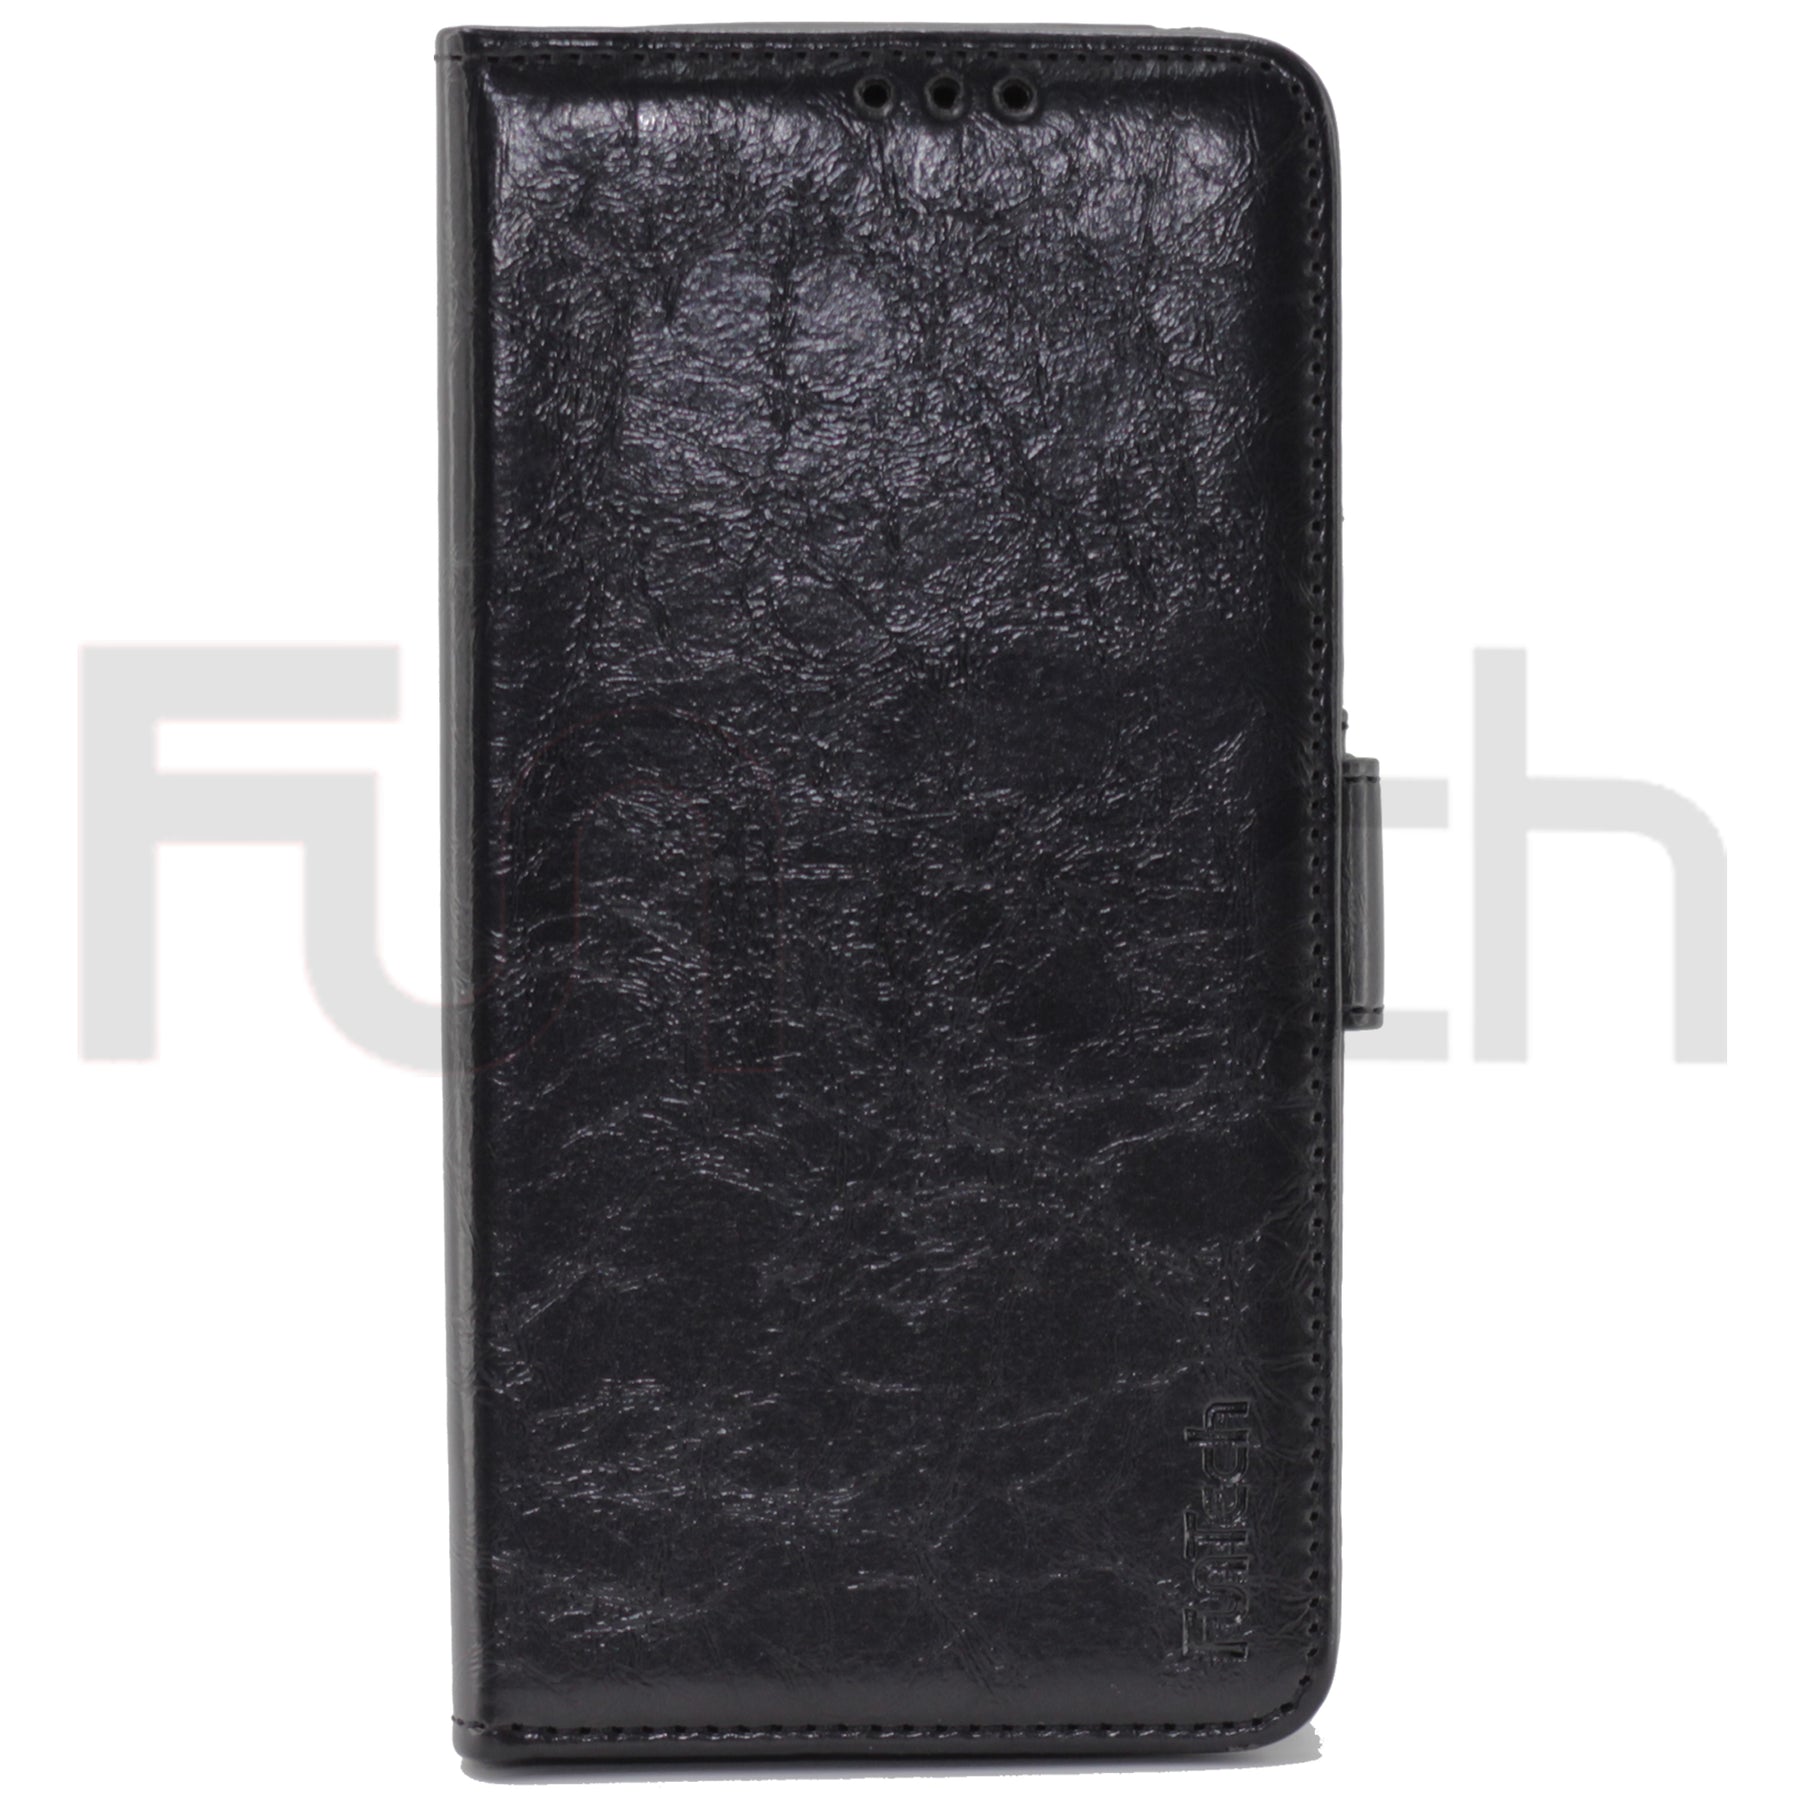 Samsung A8 2018, Leather Wallet Case, Color Black,